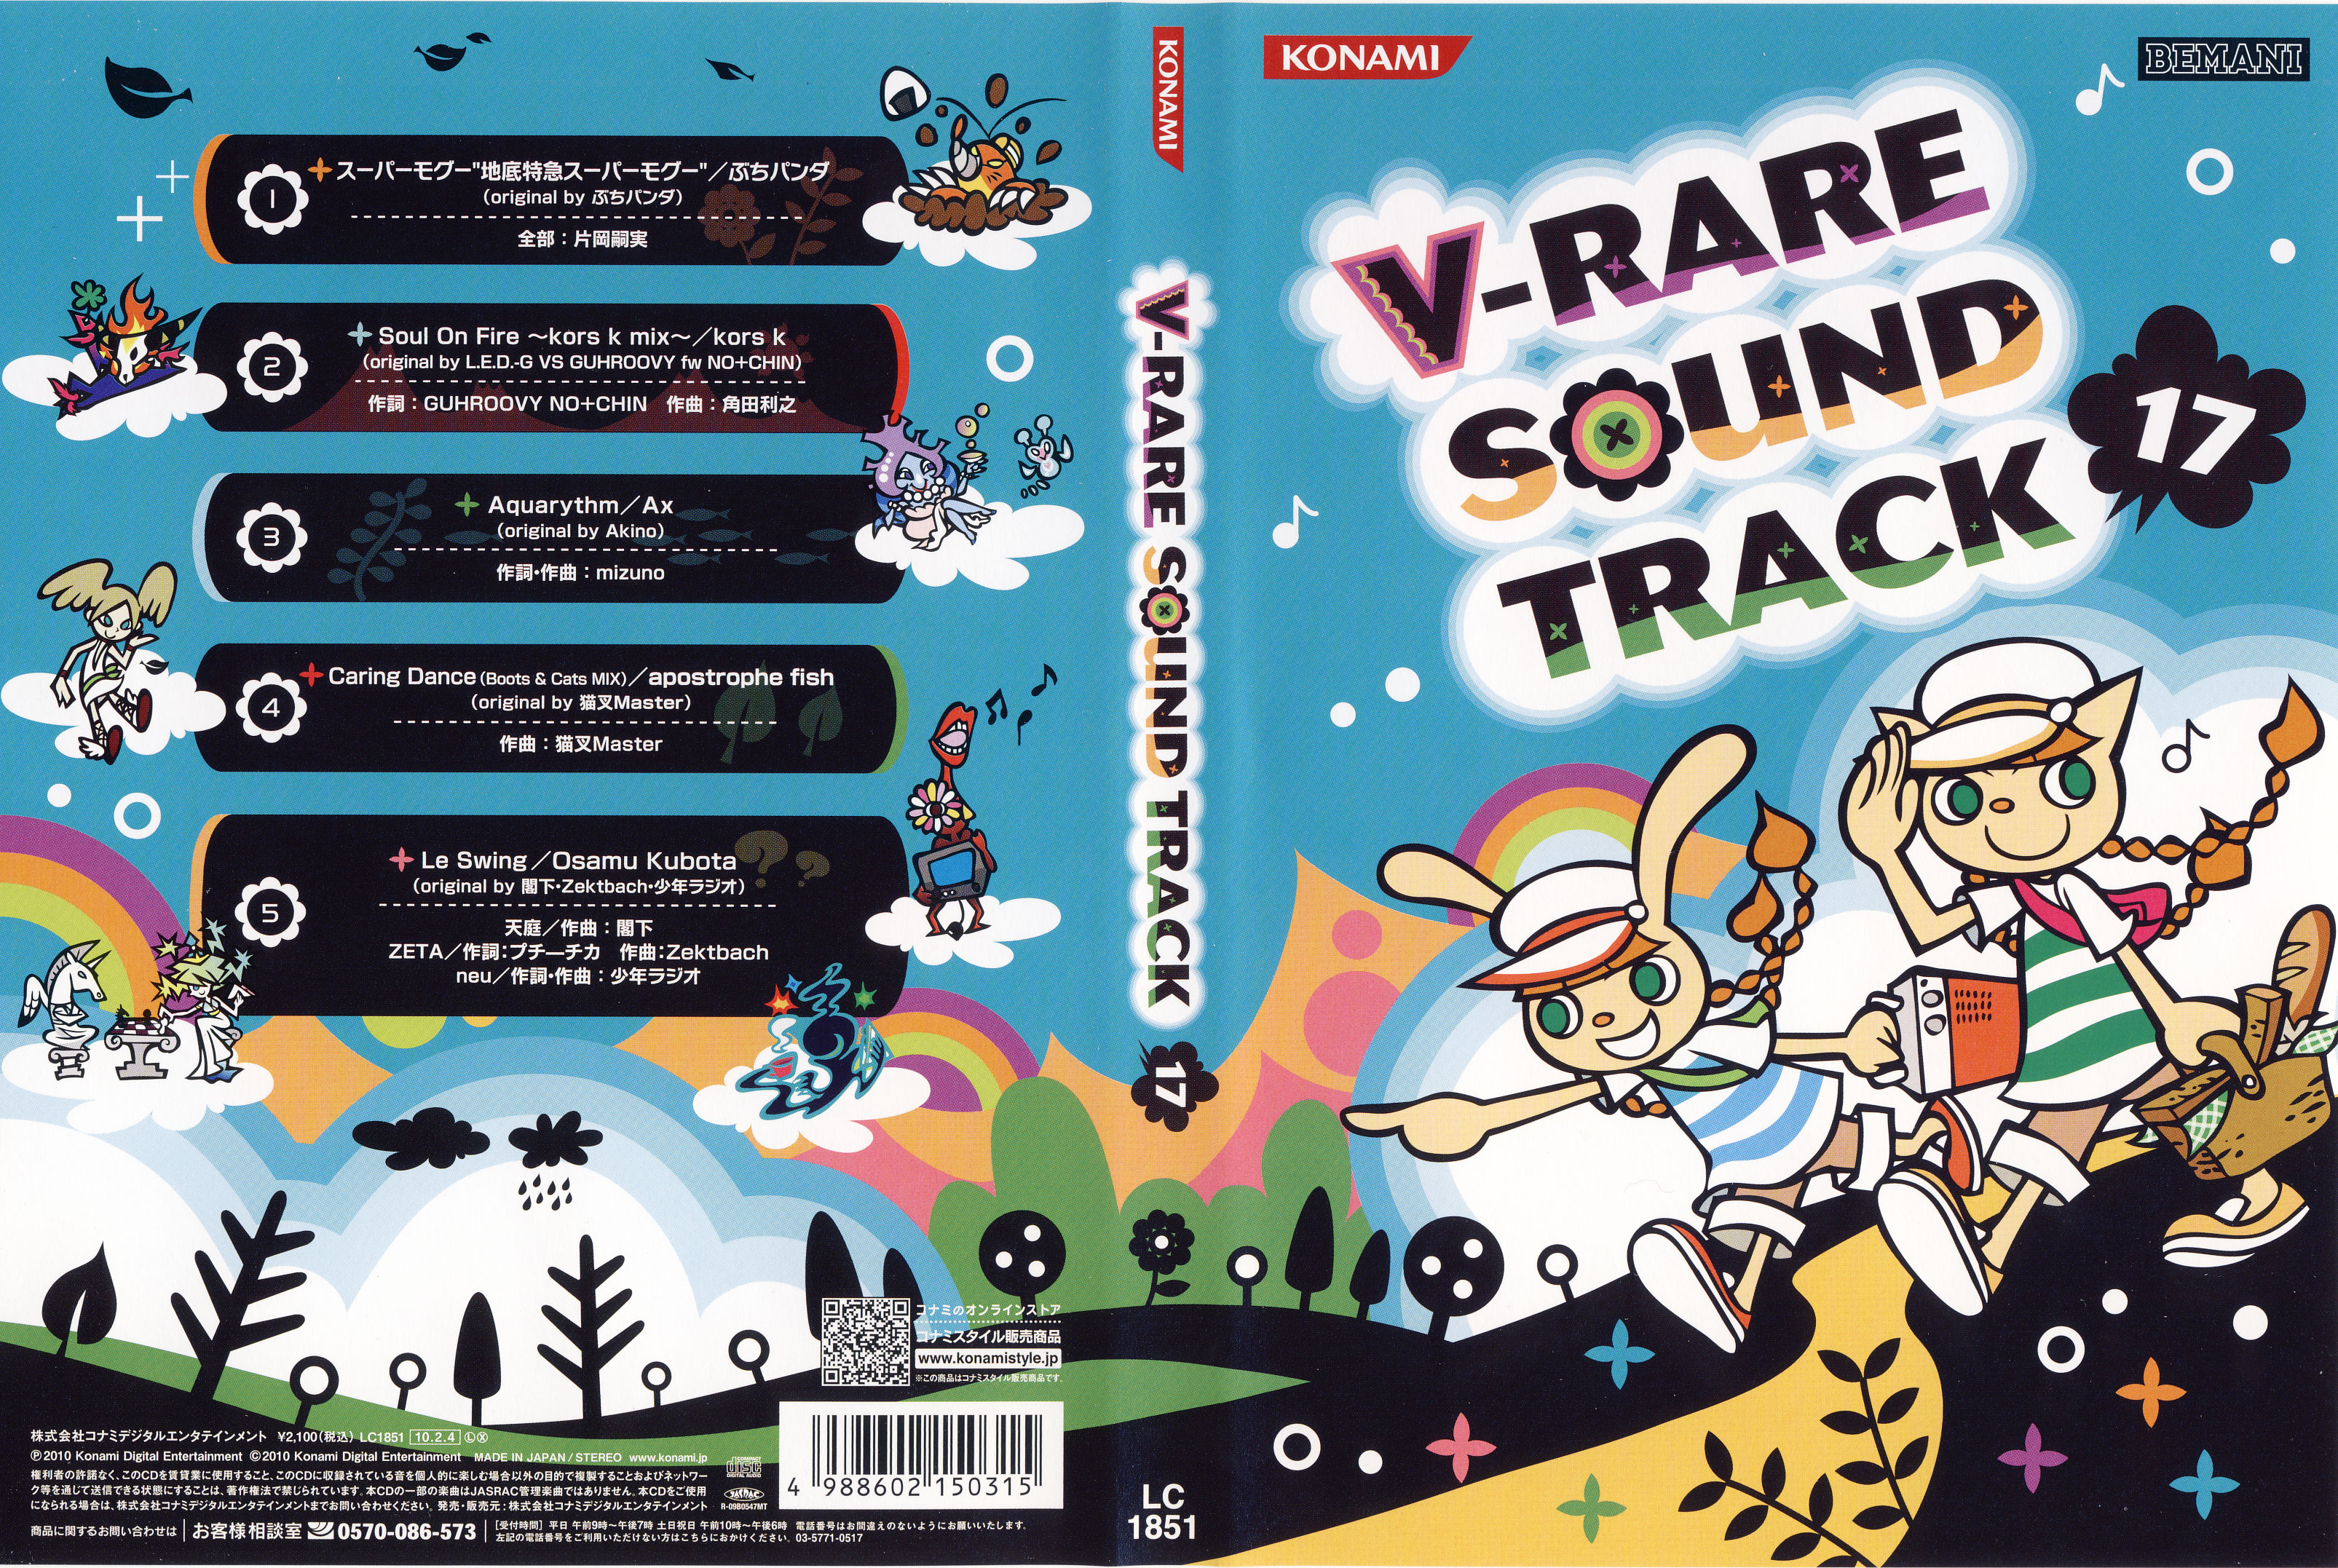 V-RARE SOUNDTRACK 17 - pop'n music portable (2010) MP3 - Download 